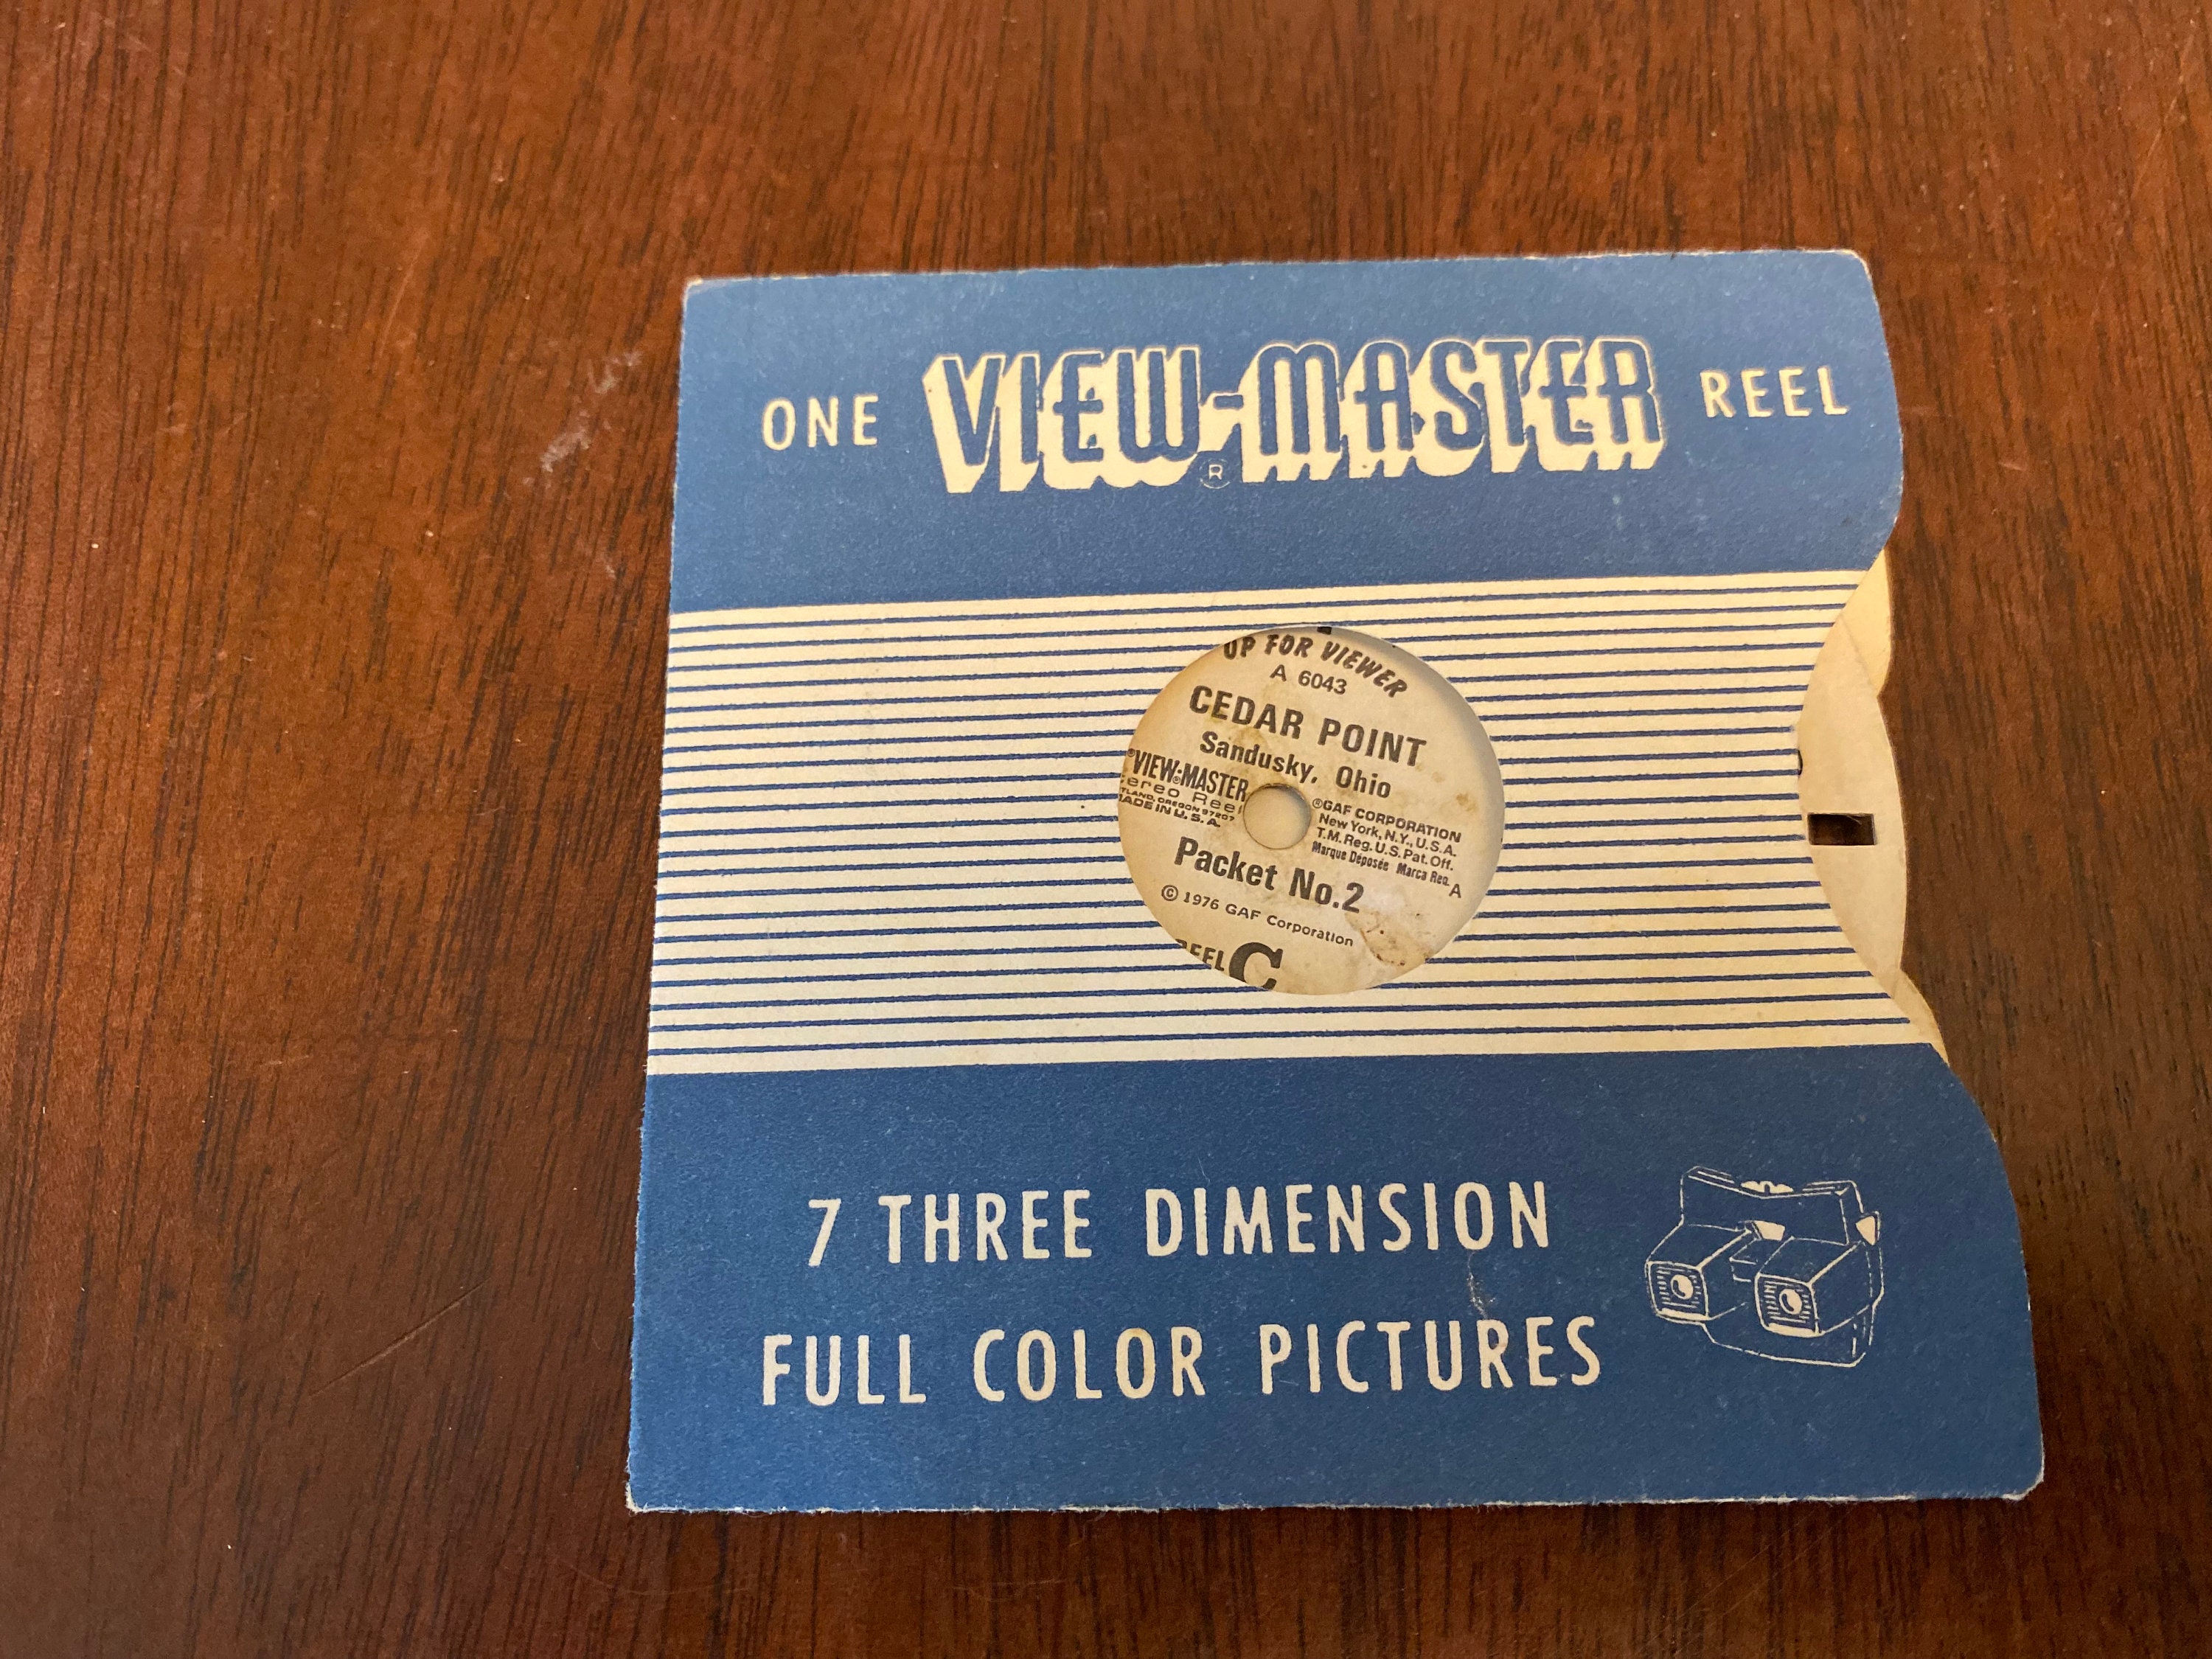 Vintage View Master Reel, View Master Disk, Cedar Point Sandusky